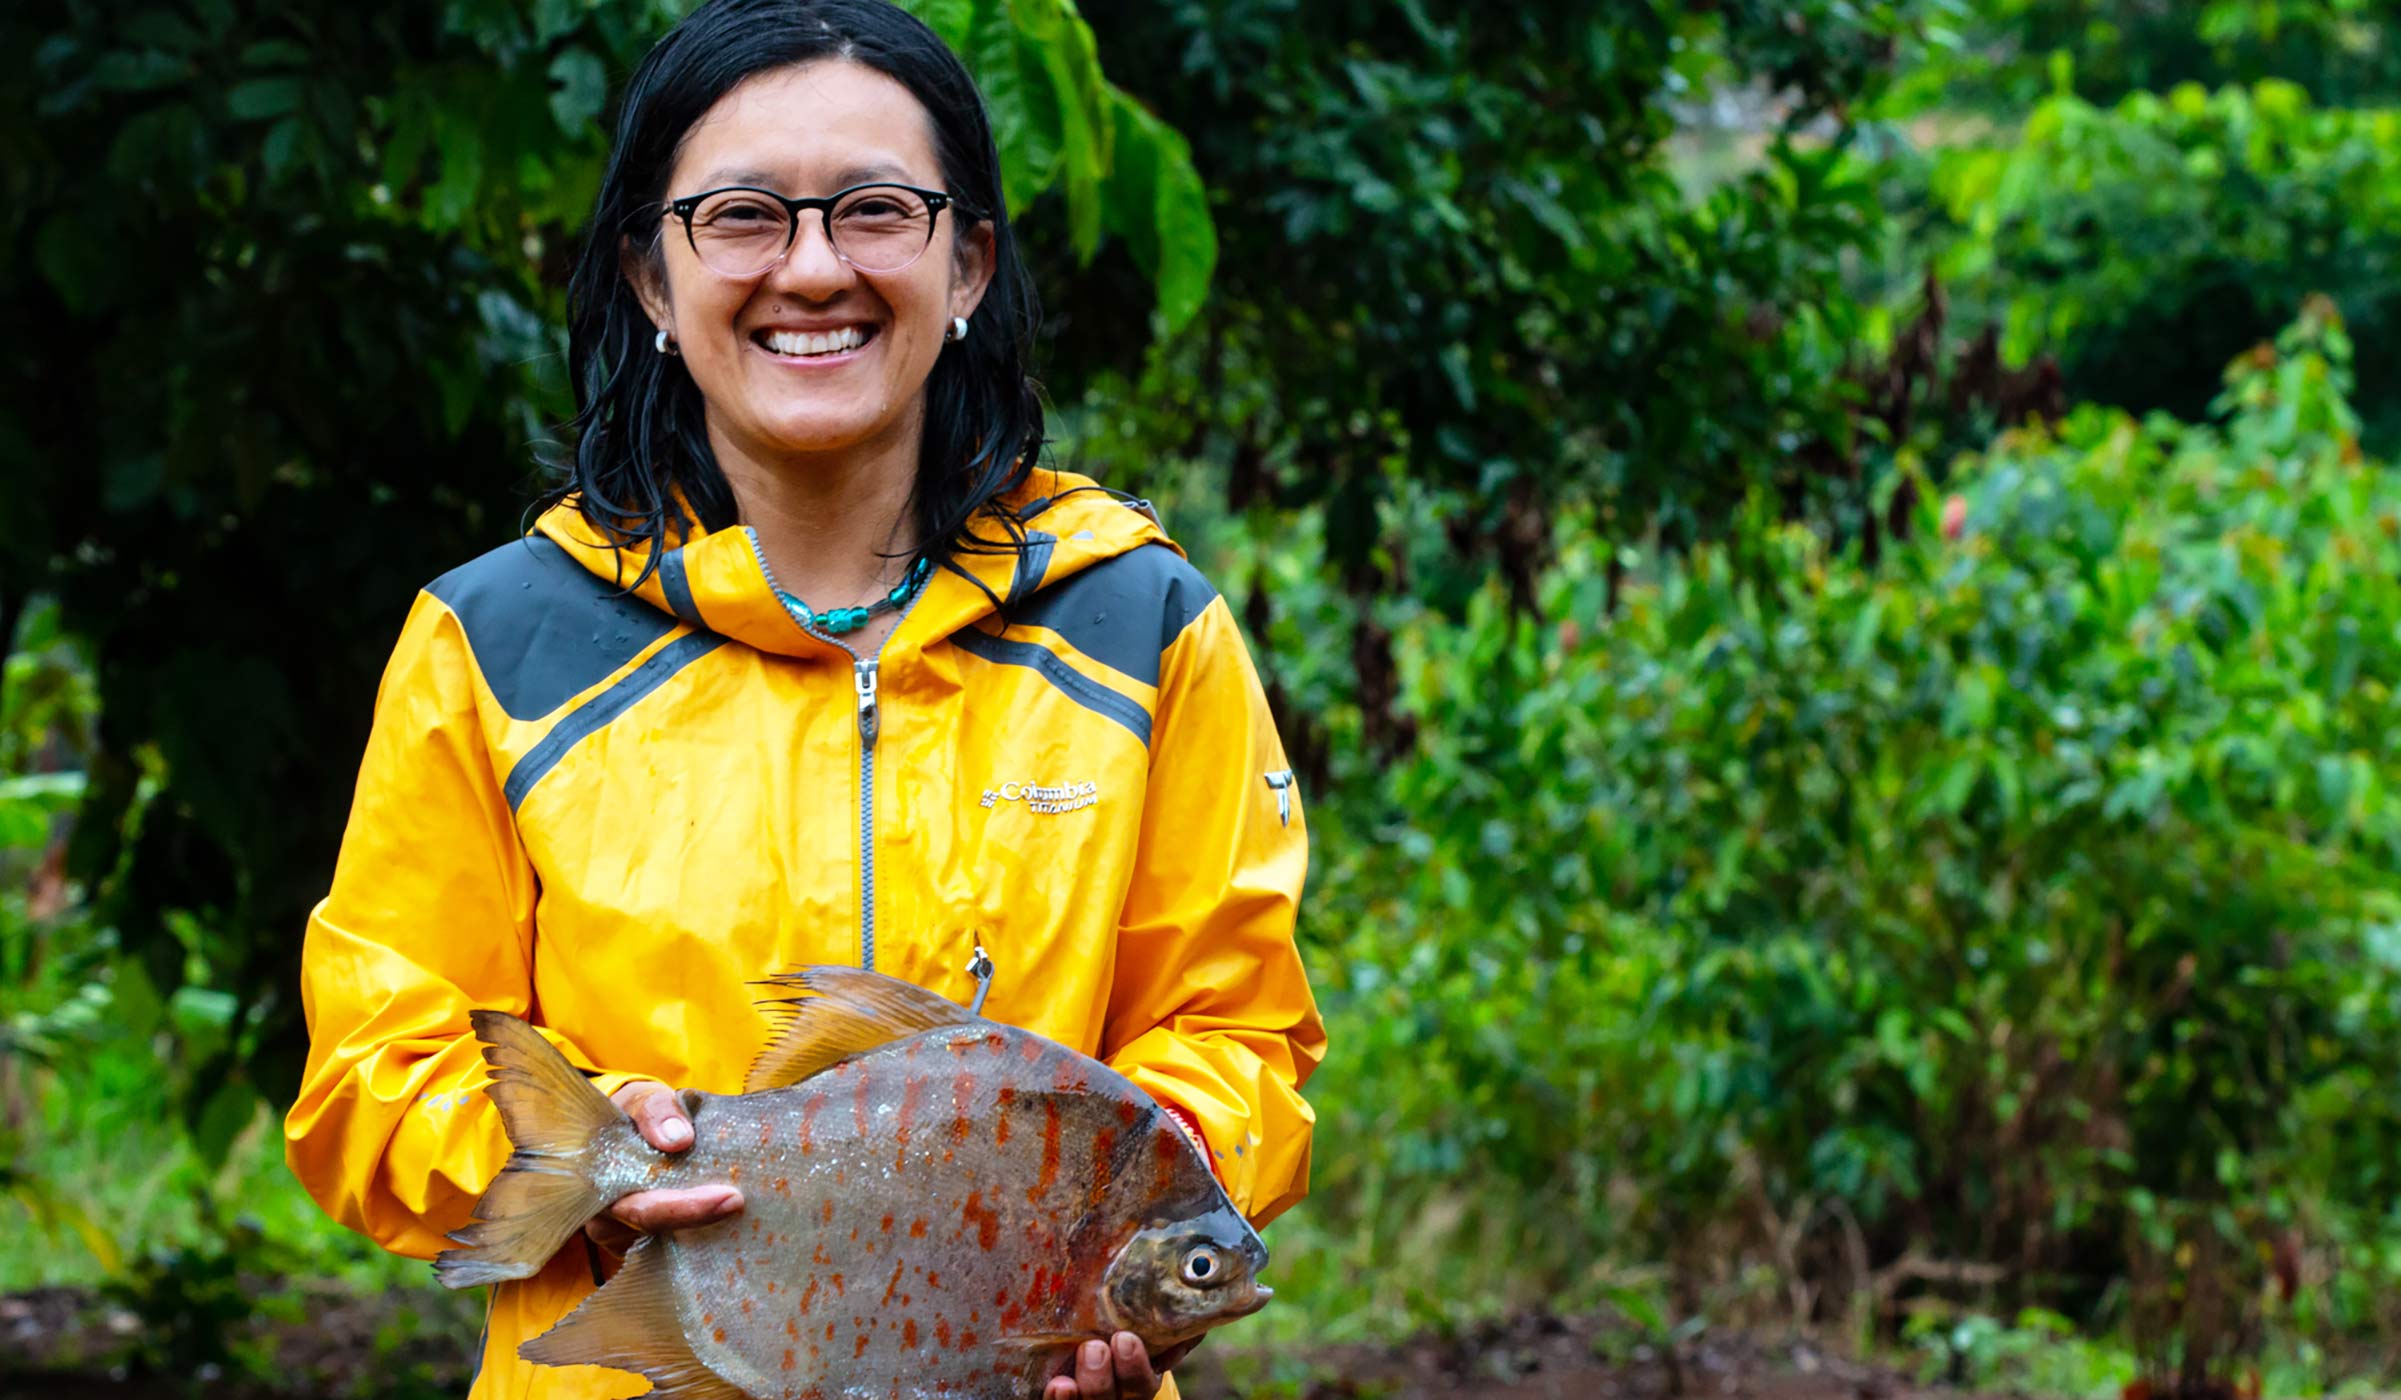 Sandra Correa pictured holding a fish